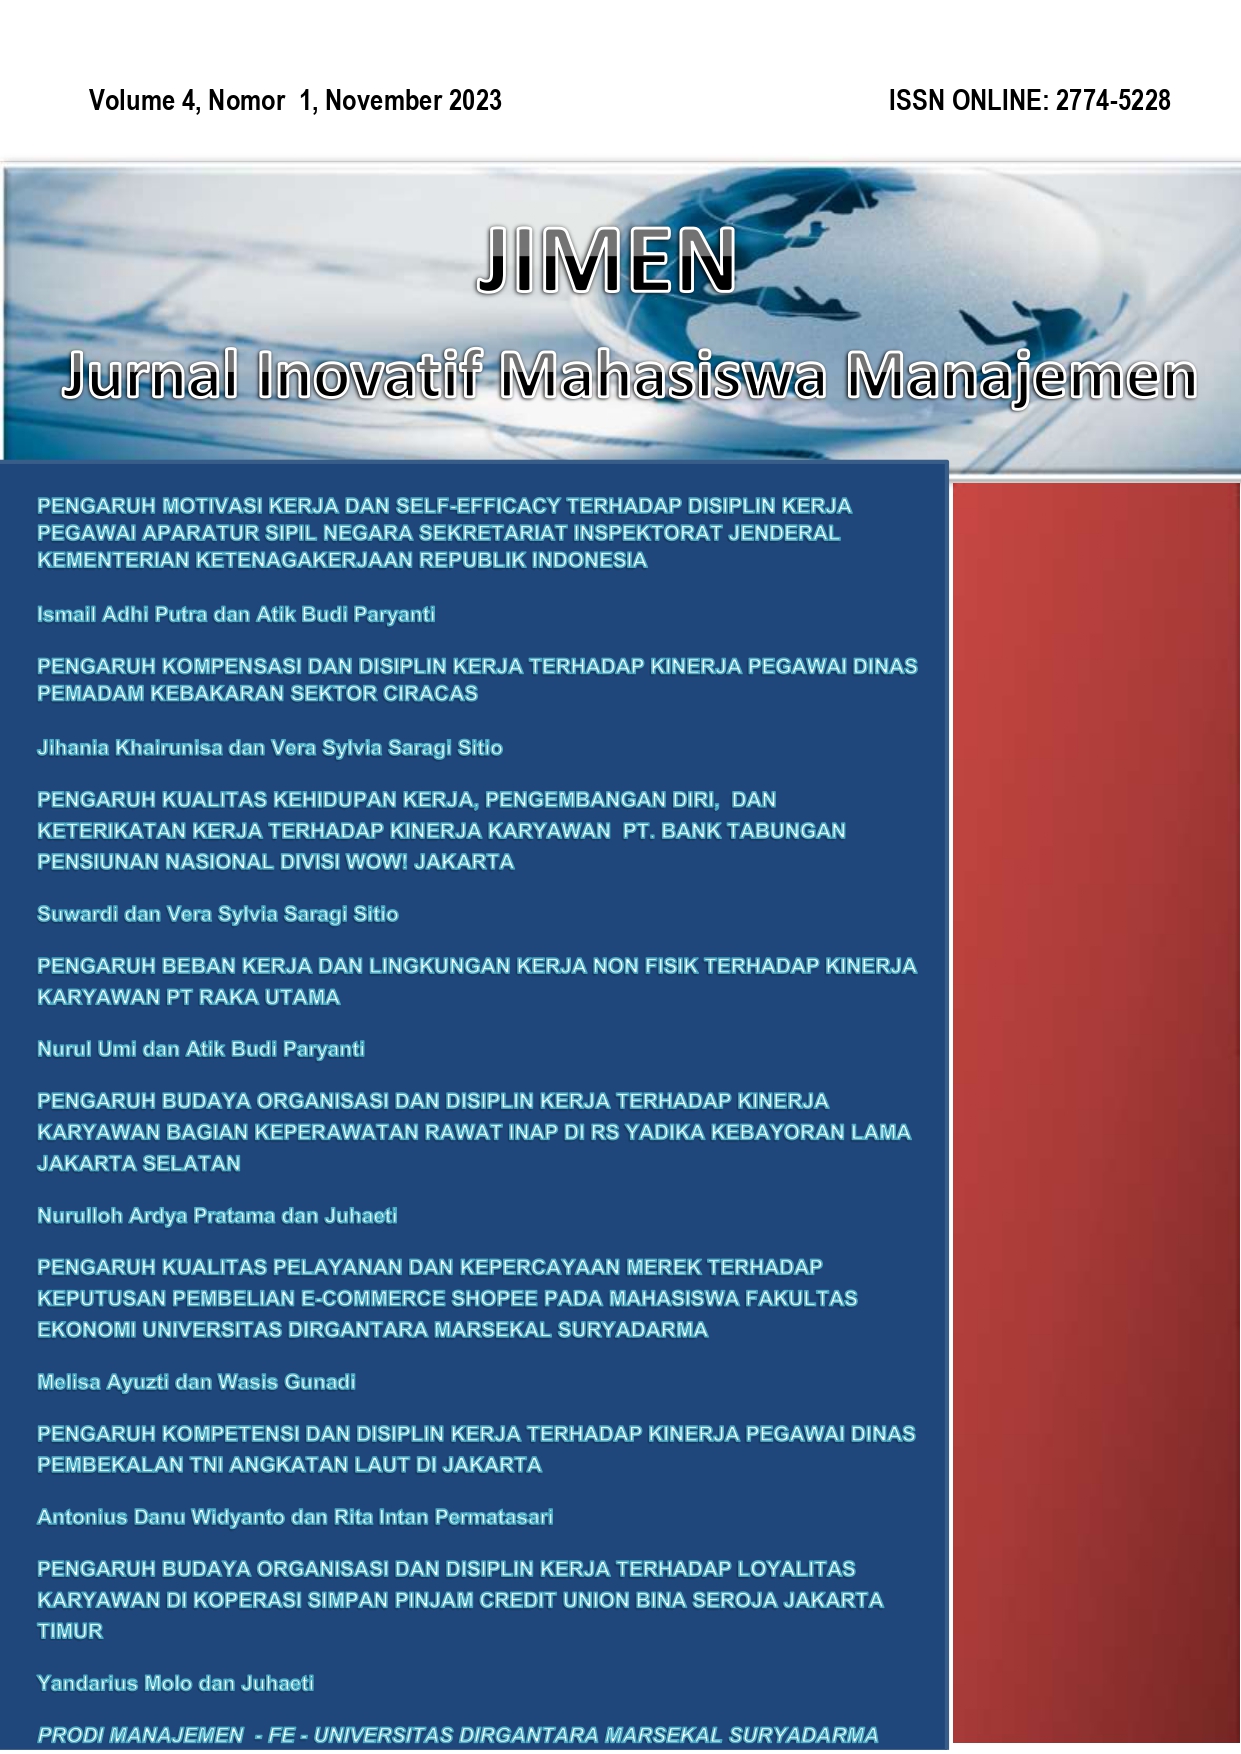 					View Vol. 4 No. 1 (2023): Jurnal Inovatif Mahasiswa Manajemen
				